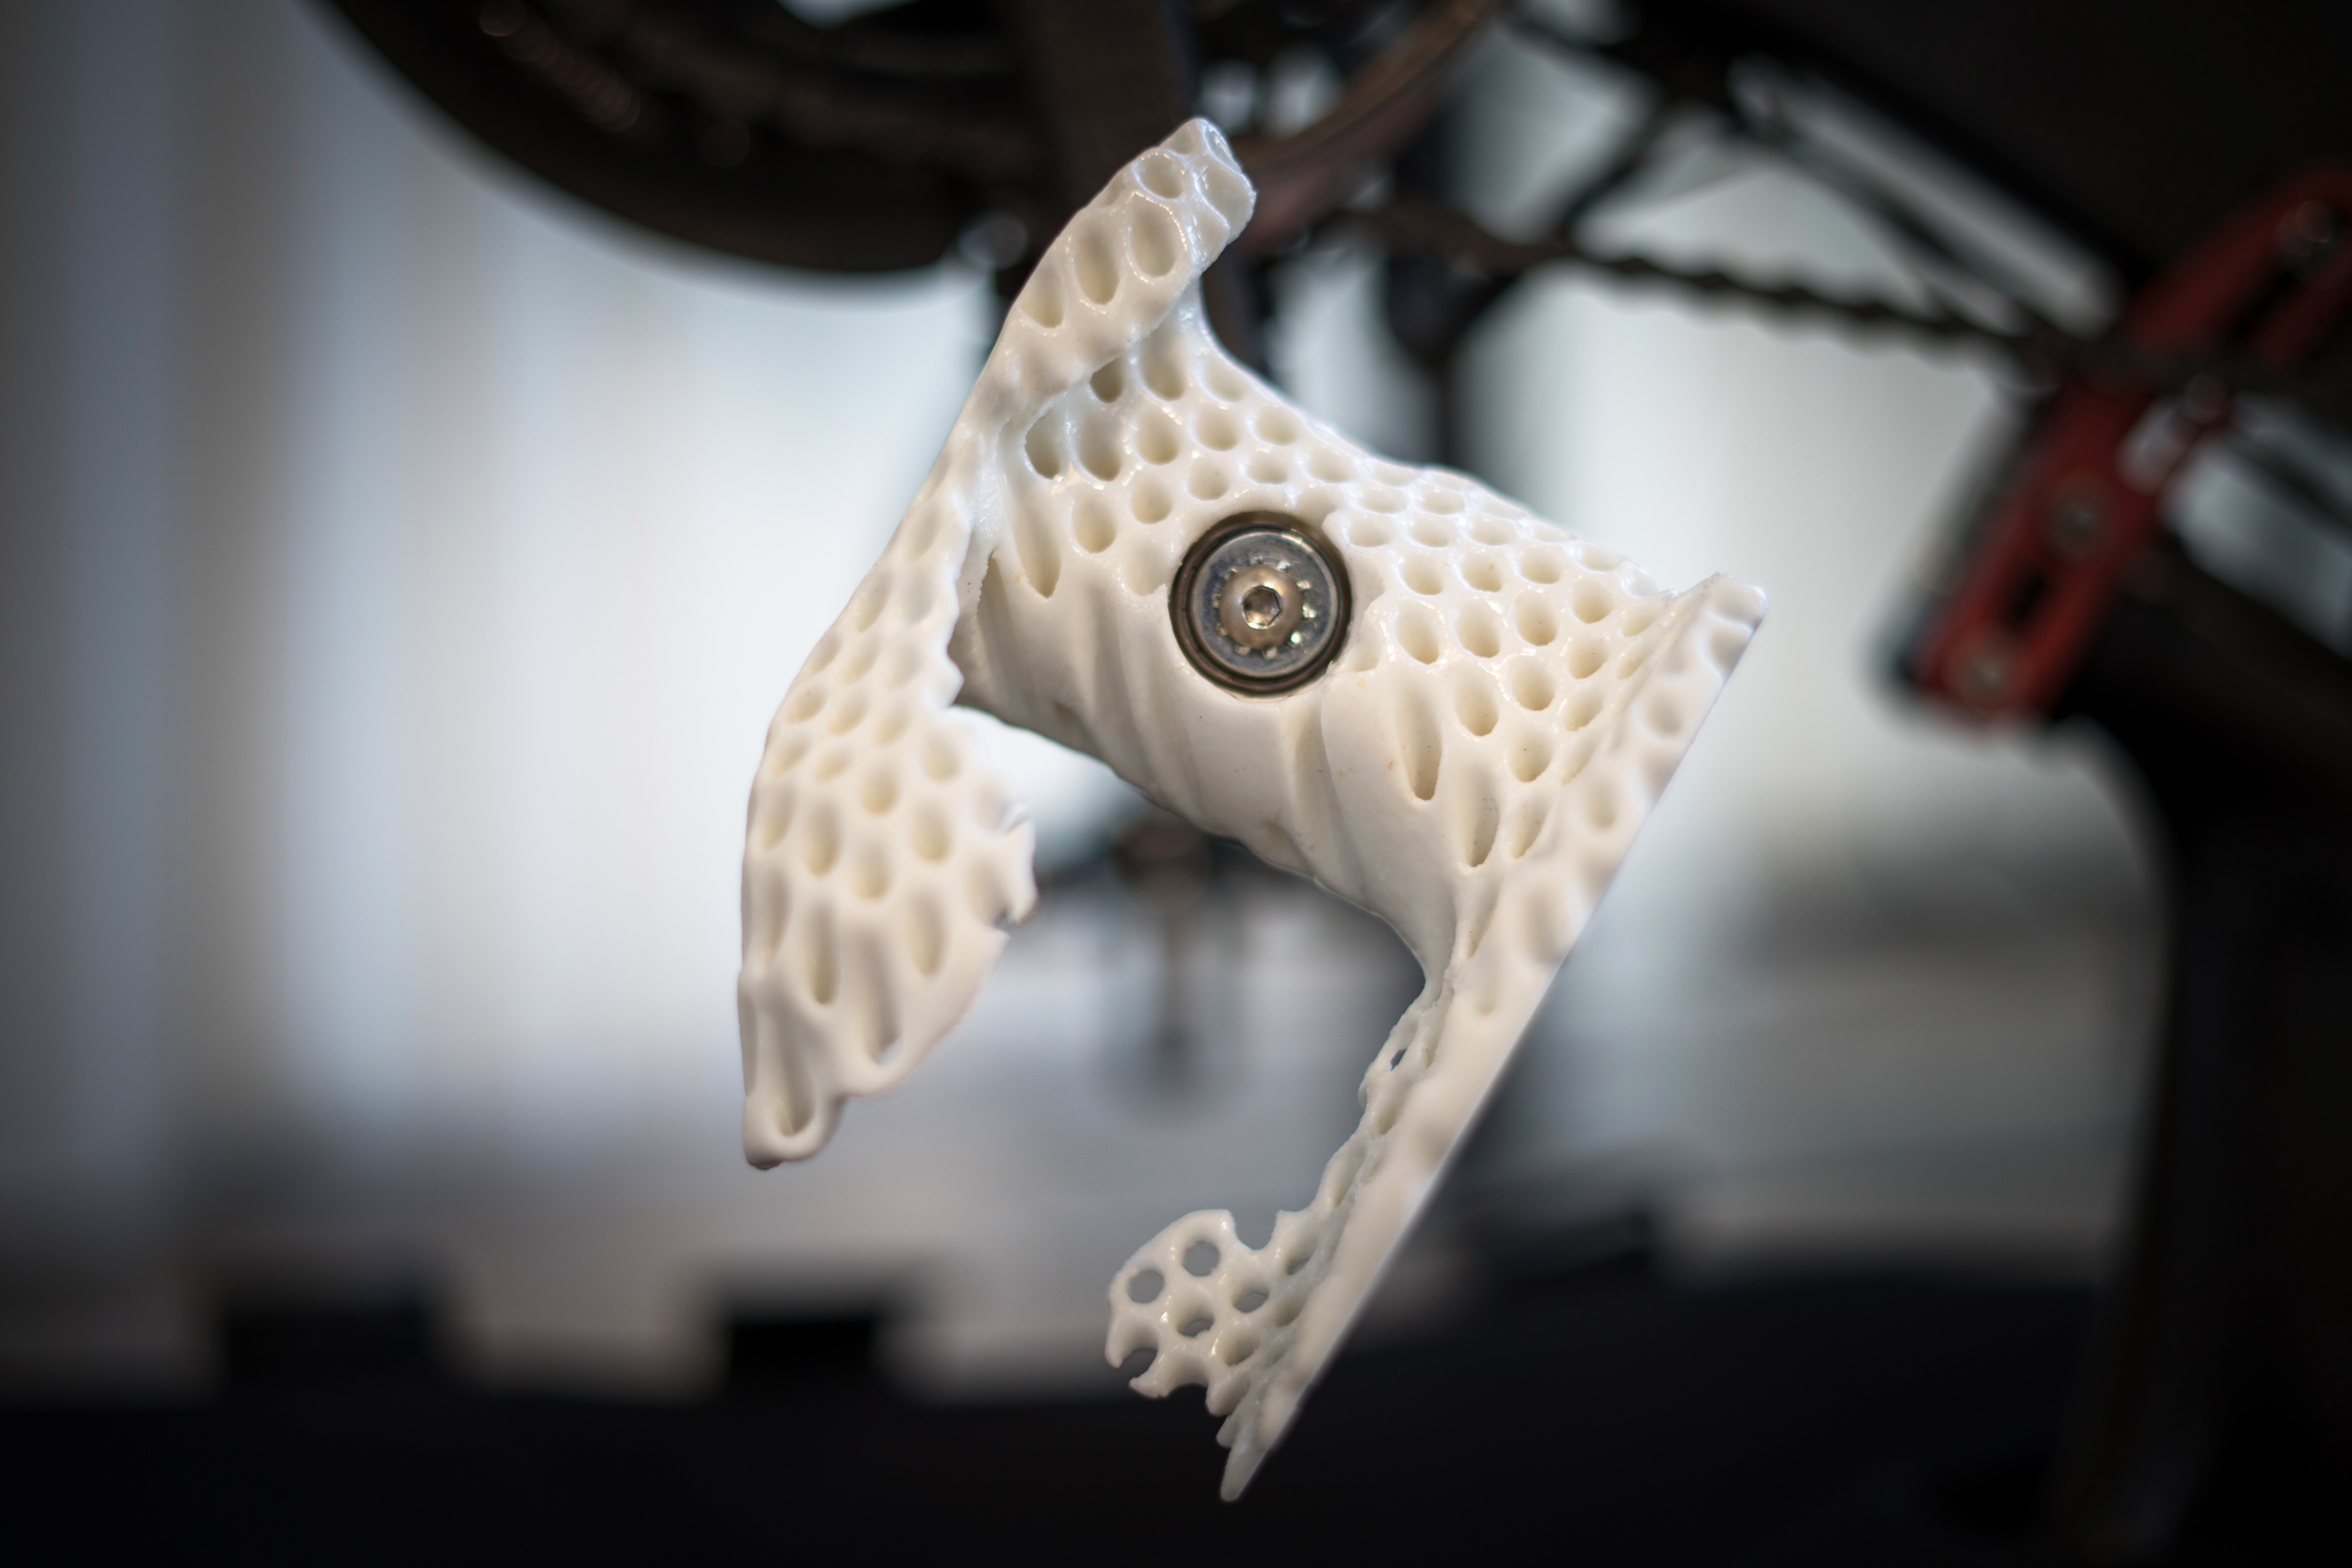 One of the 3D printed bike handles. Photo via Zortrax.